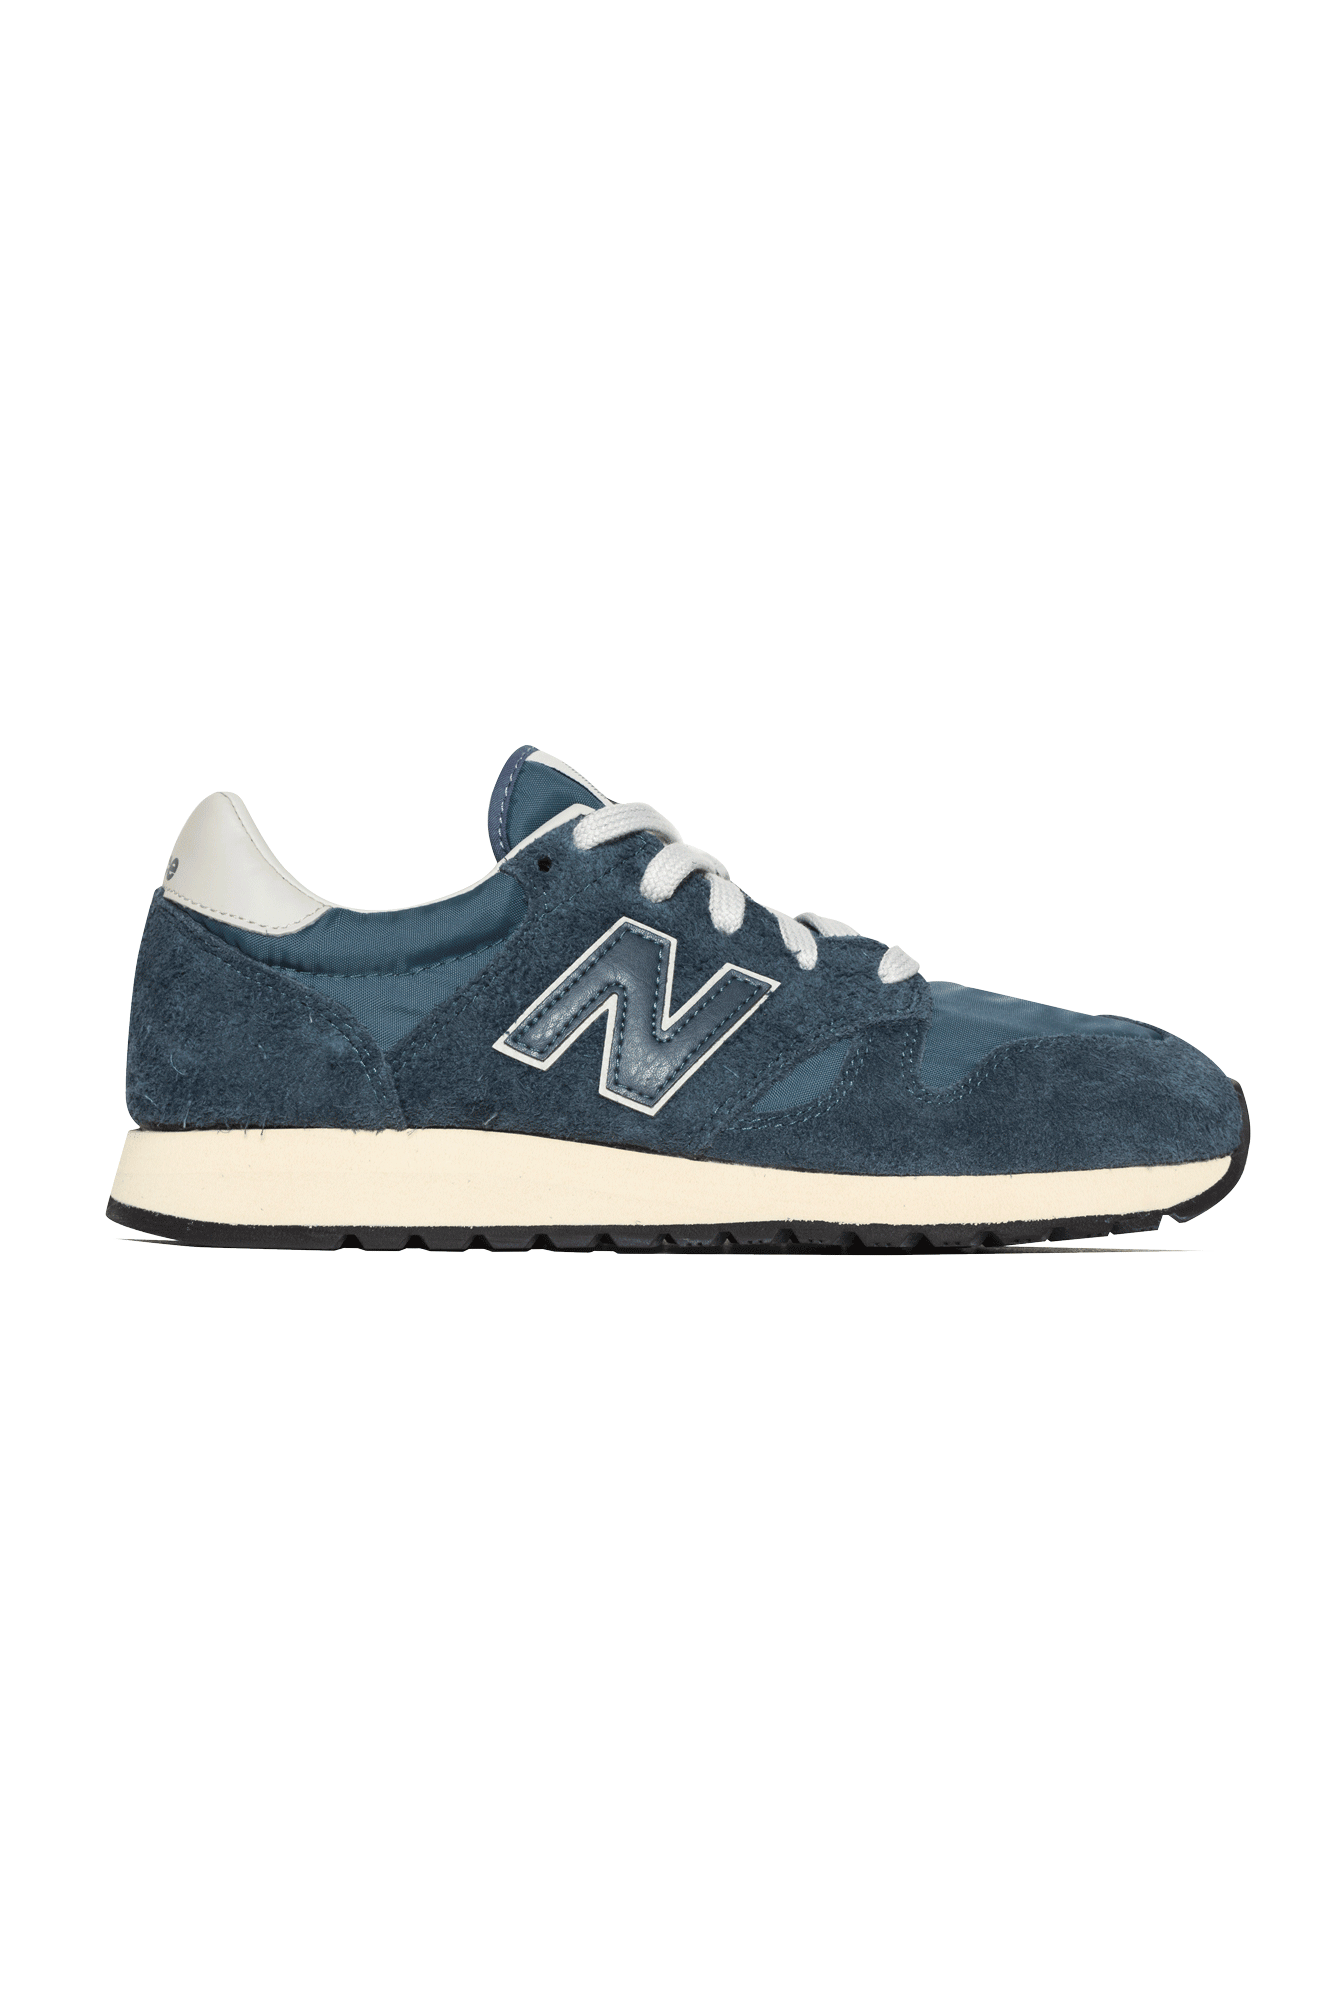 nb 520 blue